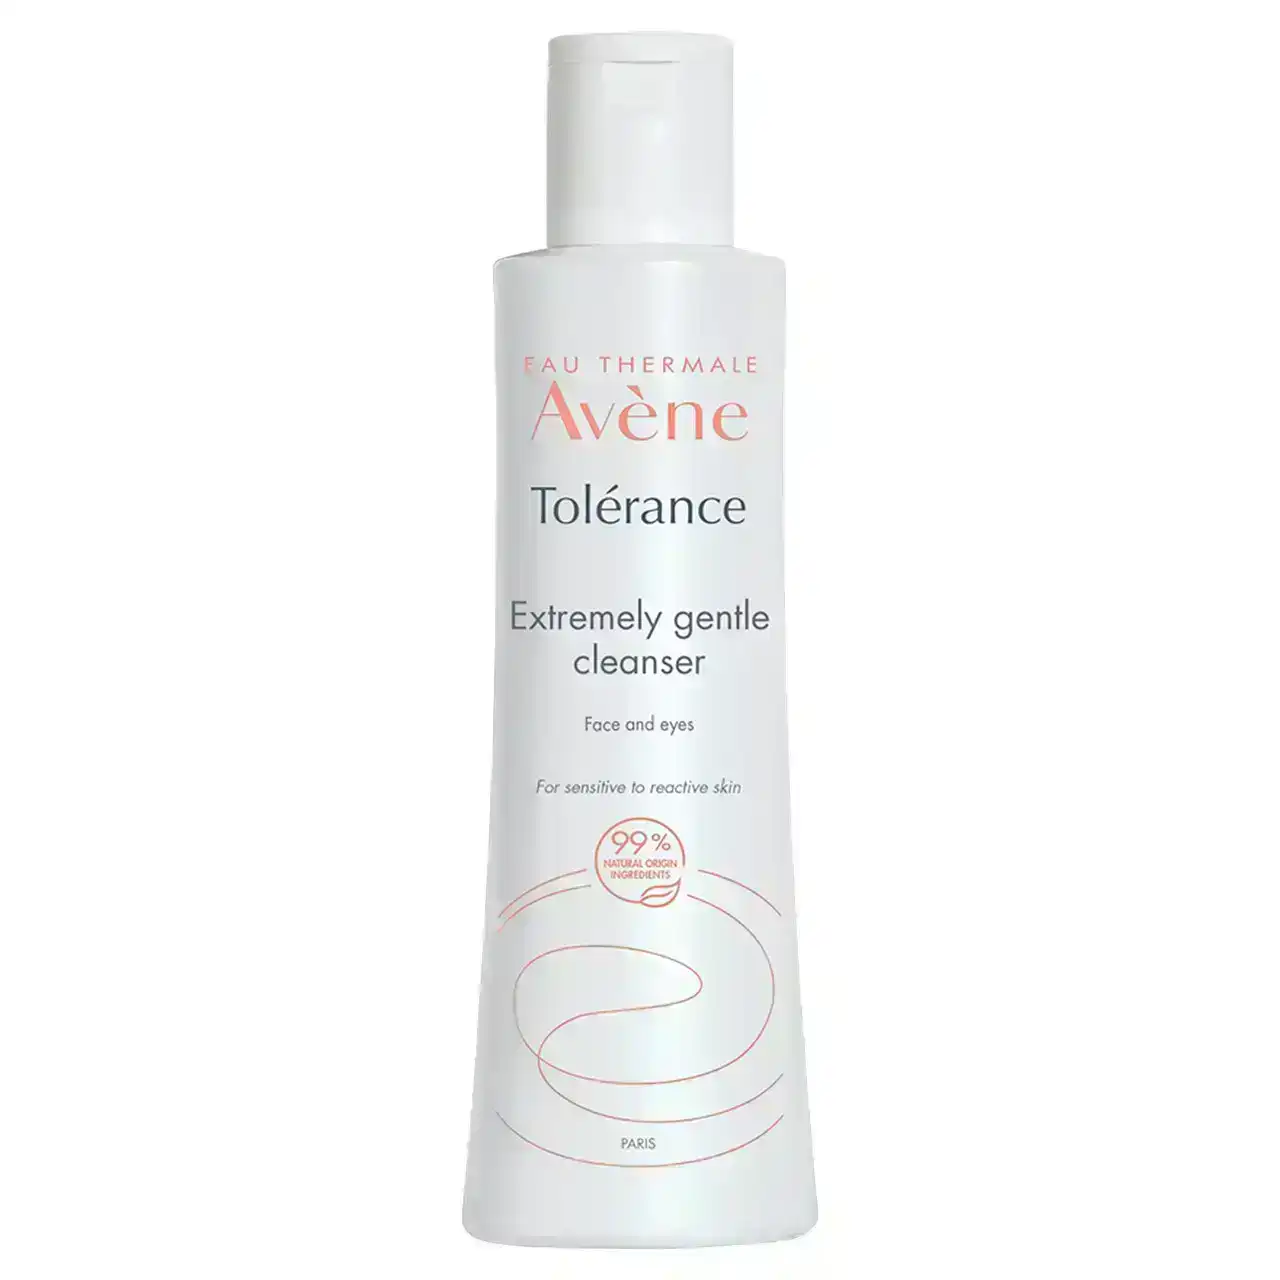 Avene Tolerance Extremely Gentle Cleanser 200ml - Cleanser for hypersensitive skin